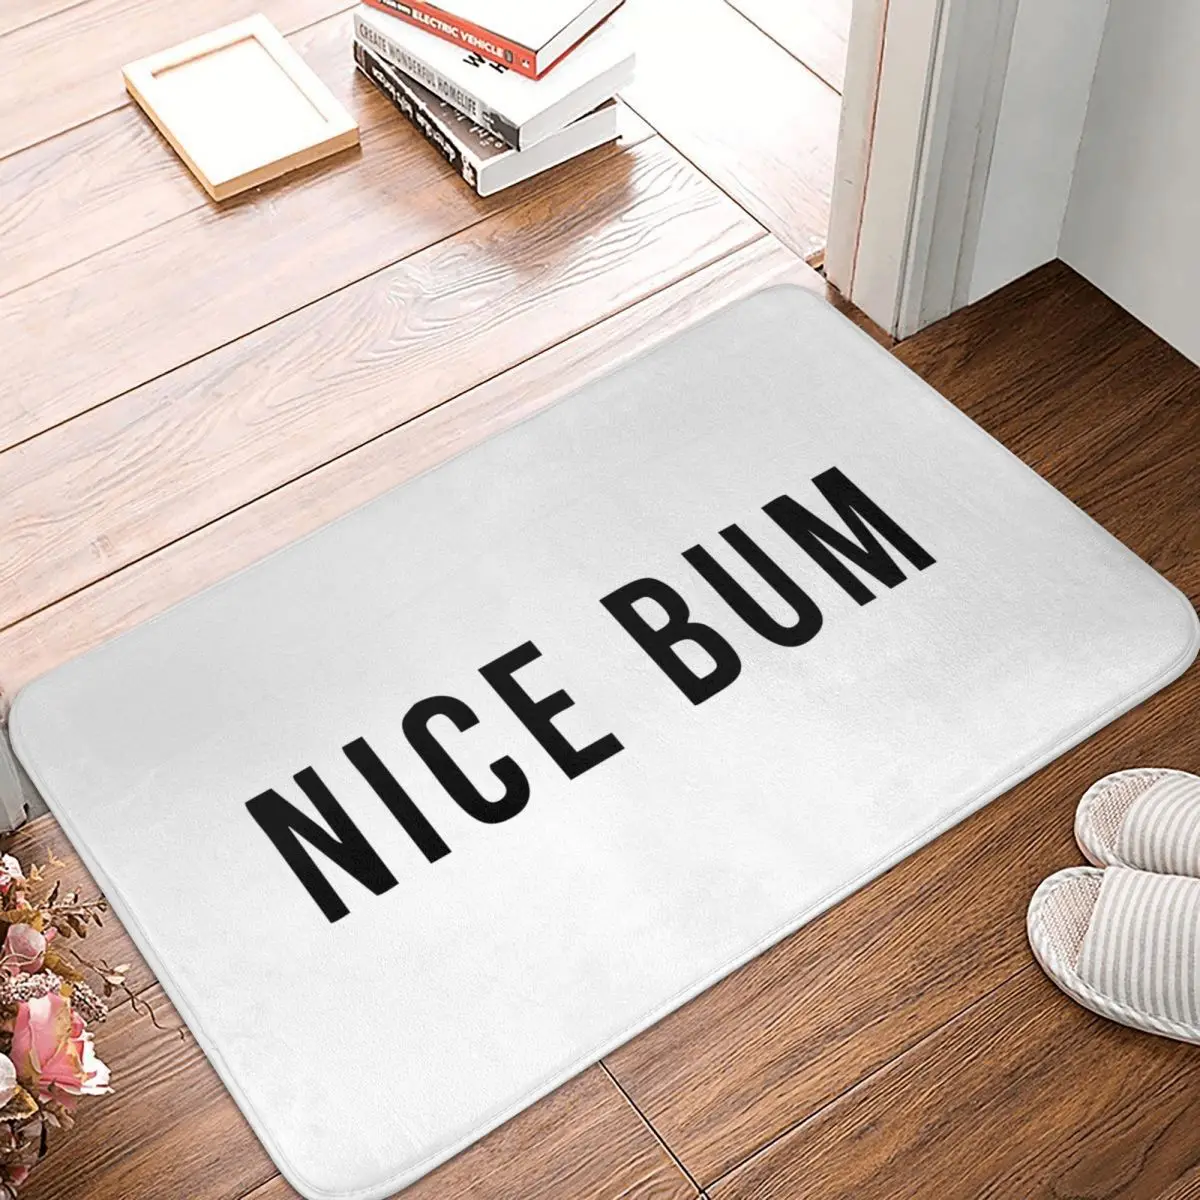 

Bathmat-Quotation-Marks Doormat Rug carpet Mat Footpad Anti-slip Water oil proofEntrance Kitchen Bedroom balcony Cartoon